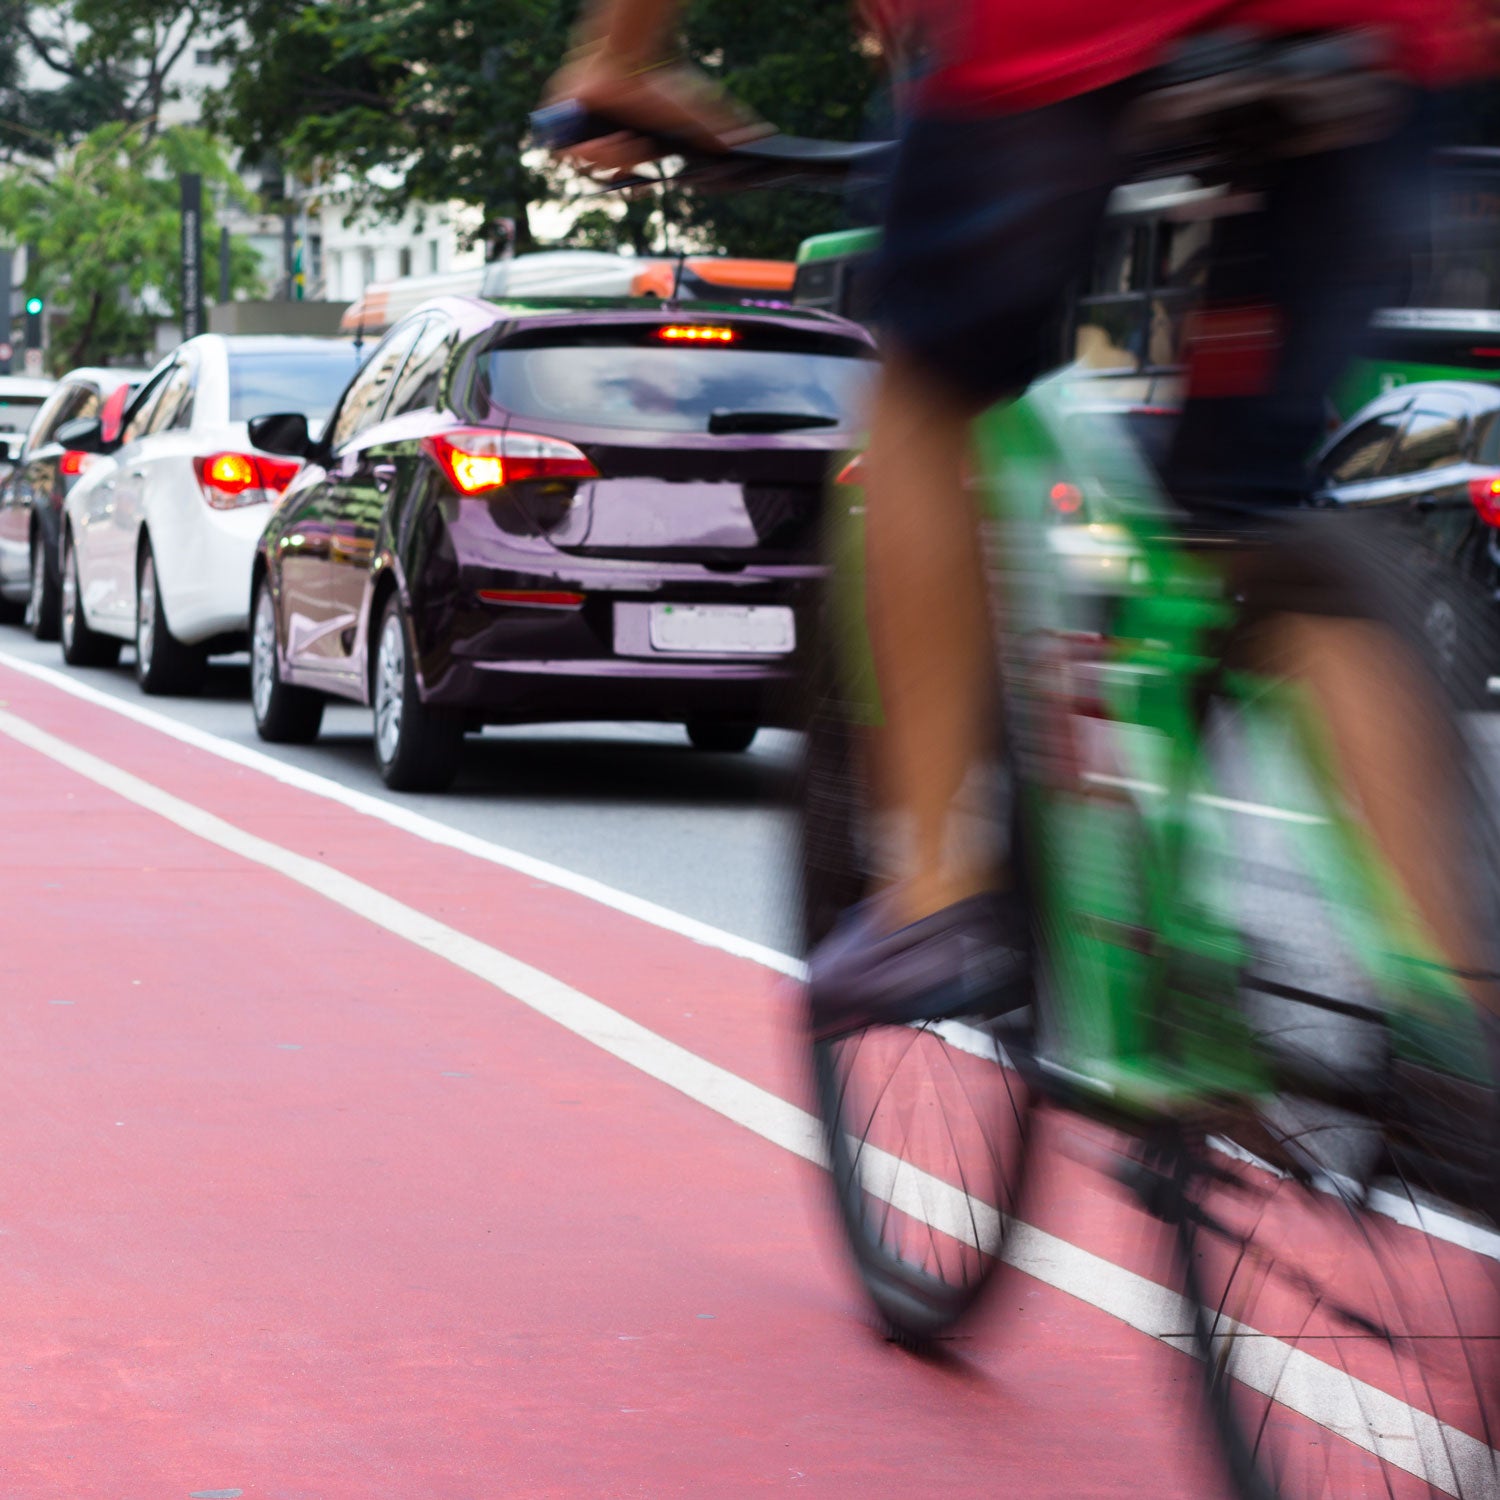 https://cdn.outsideonline.com/wp-content/uploads/2018/05/17/bike-in-city-bike-lane-blur_s.jpg